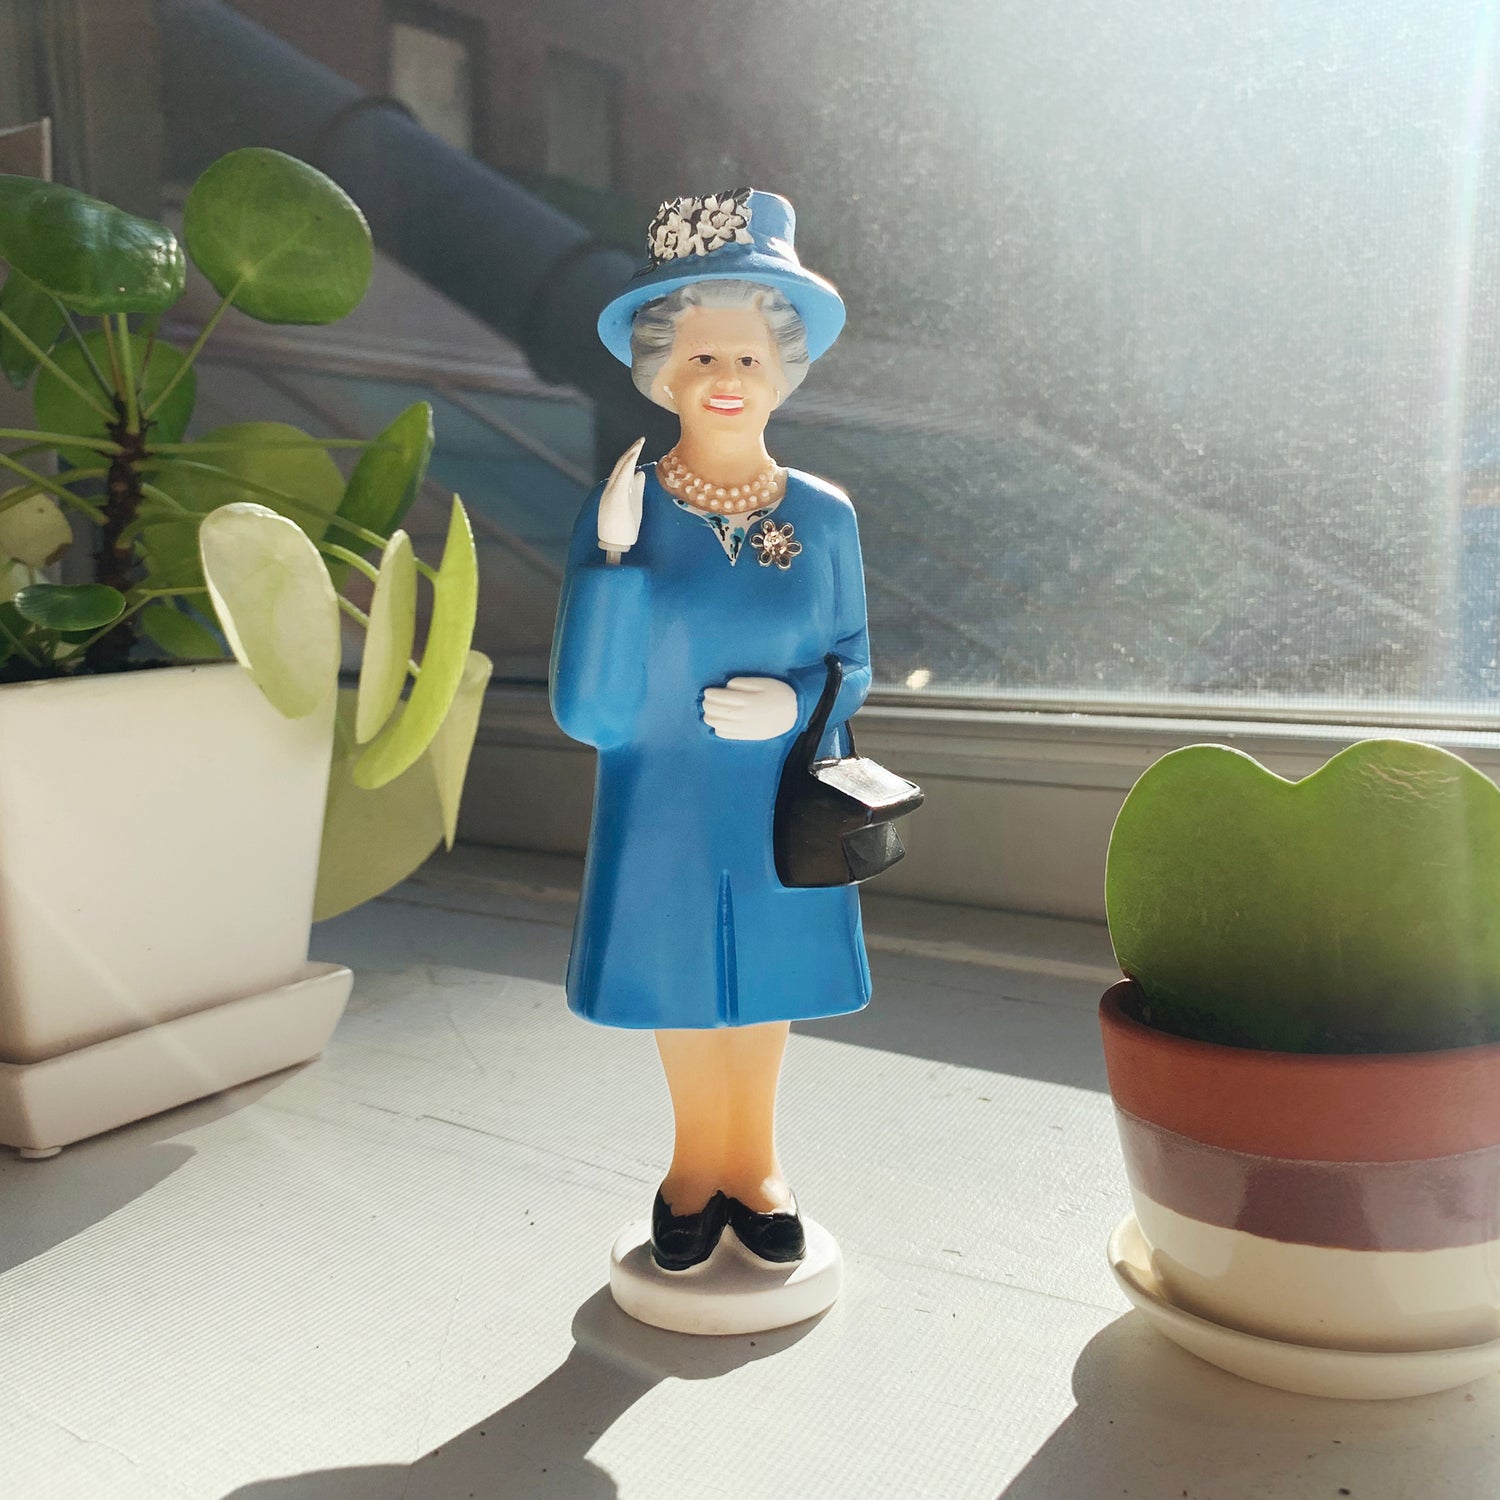 Figurine solaire Reine d'Angleterre - KIKKERLAND